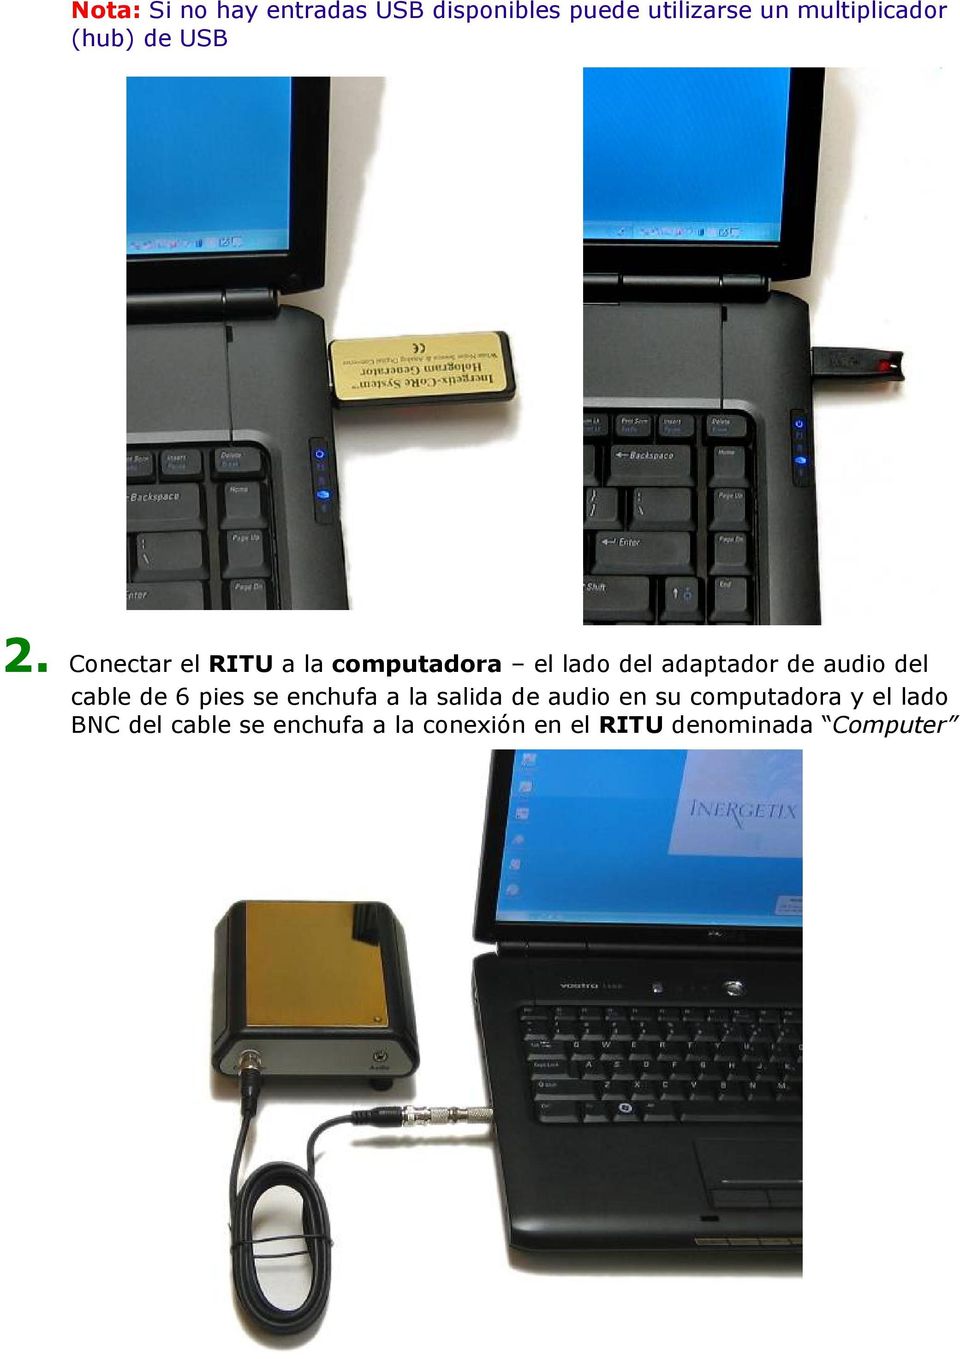 Conectar el RITU a la computadora el lado del adaptador de audio del cable